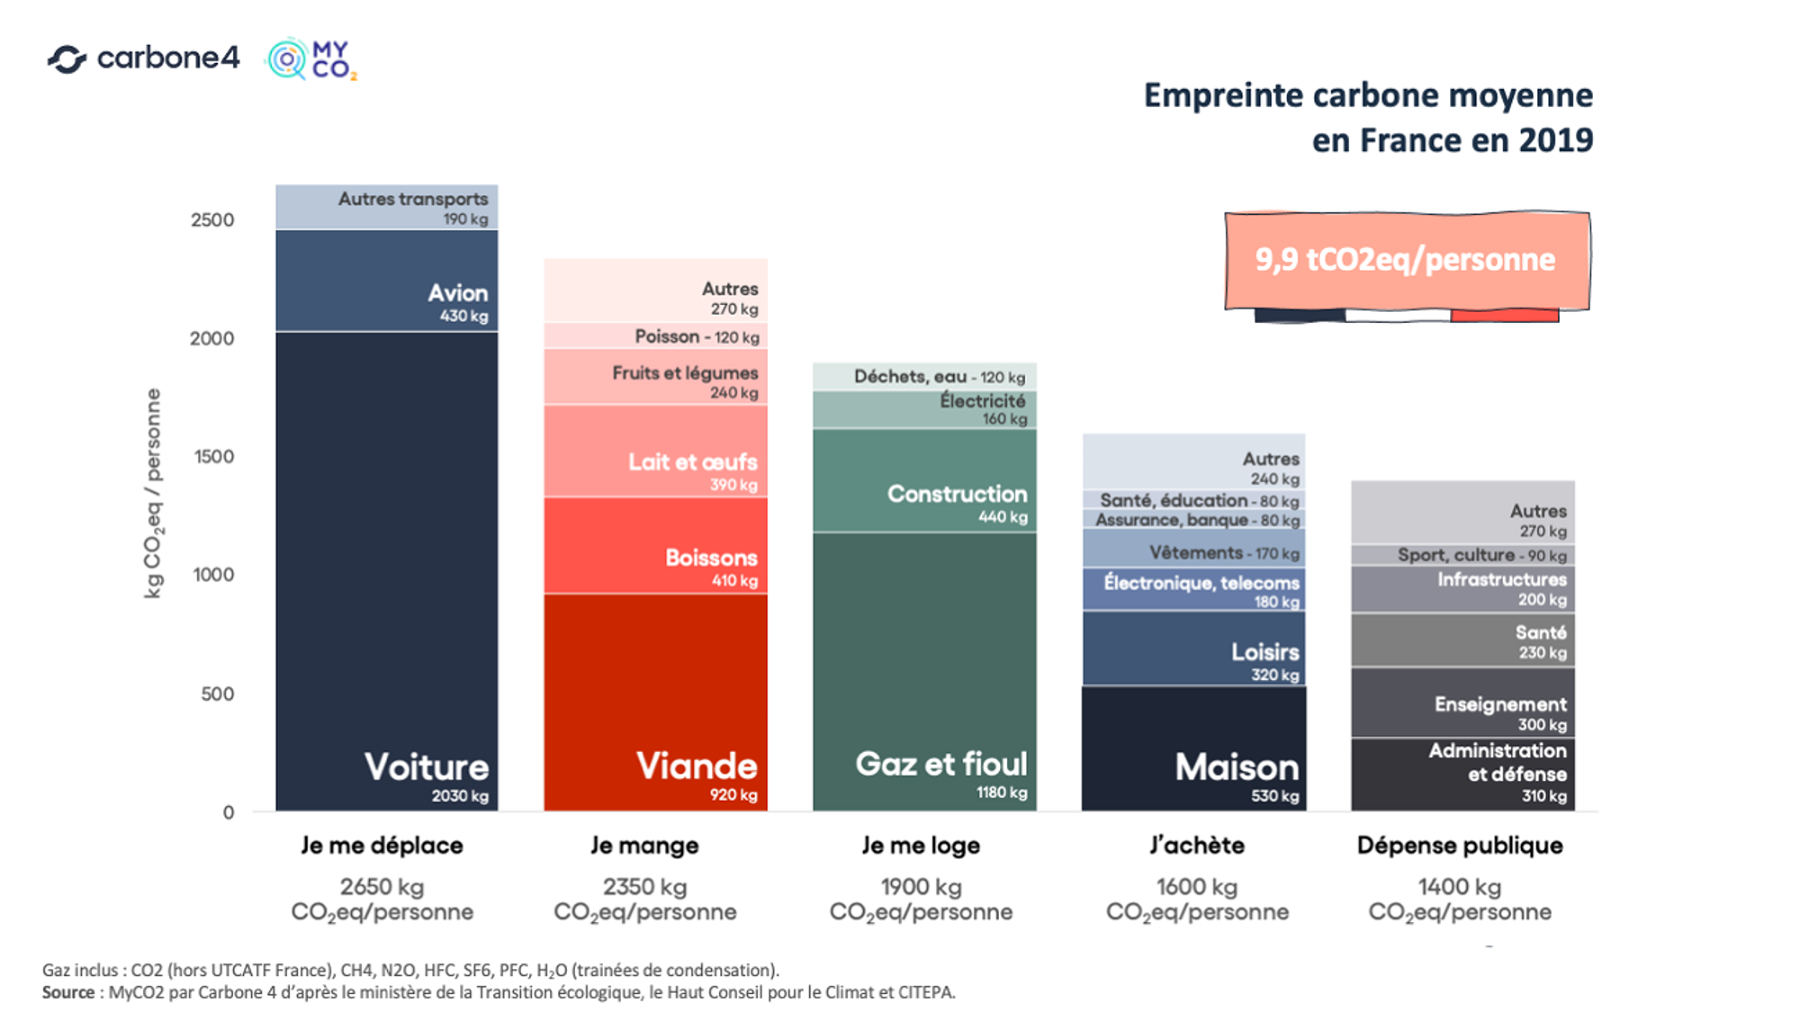 Empreinte carbone moyenne en France en 2019